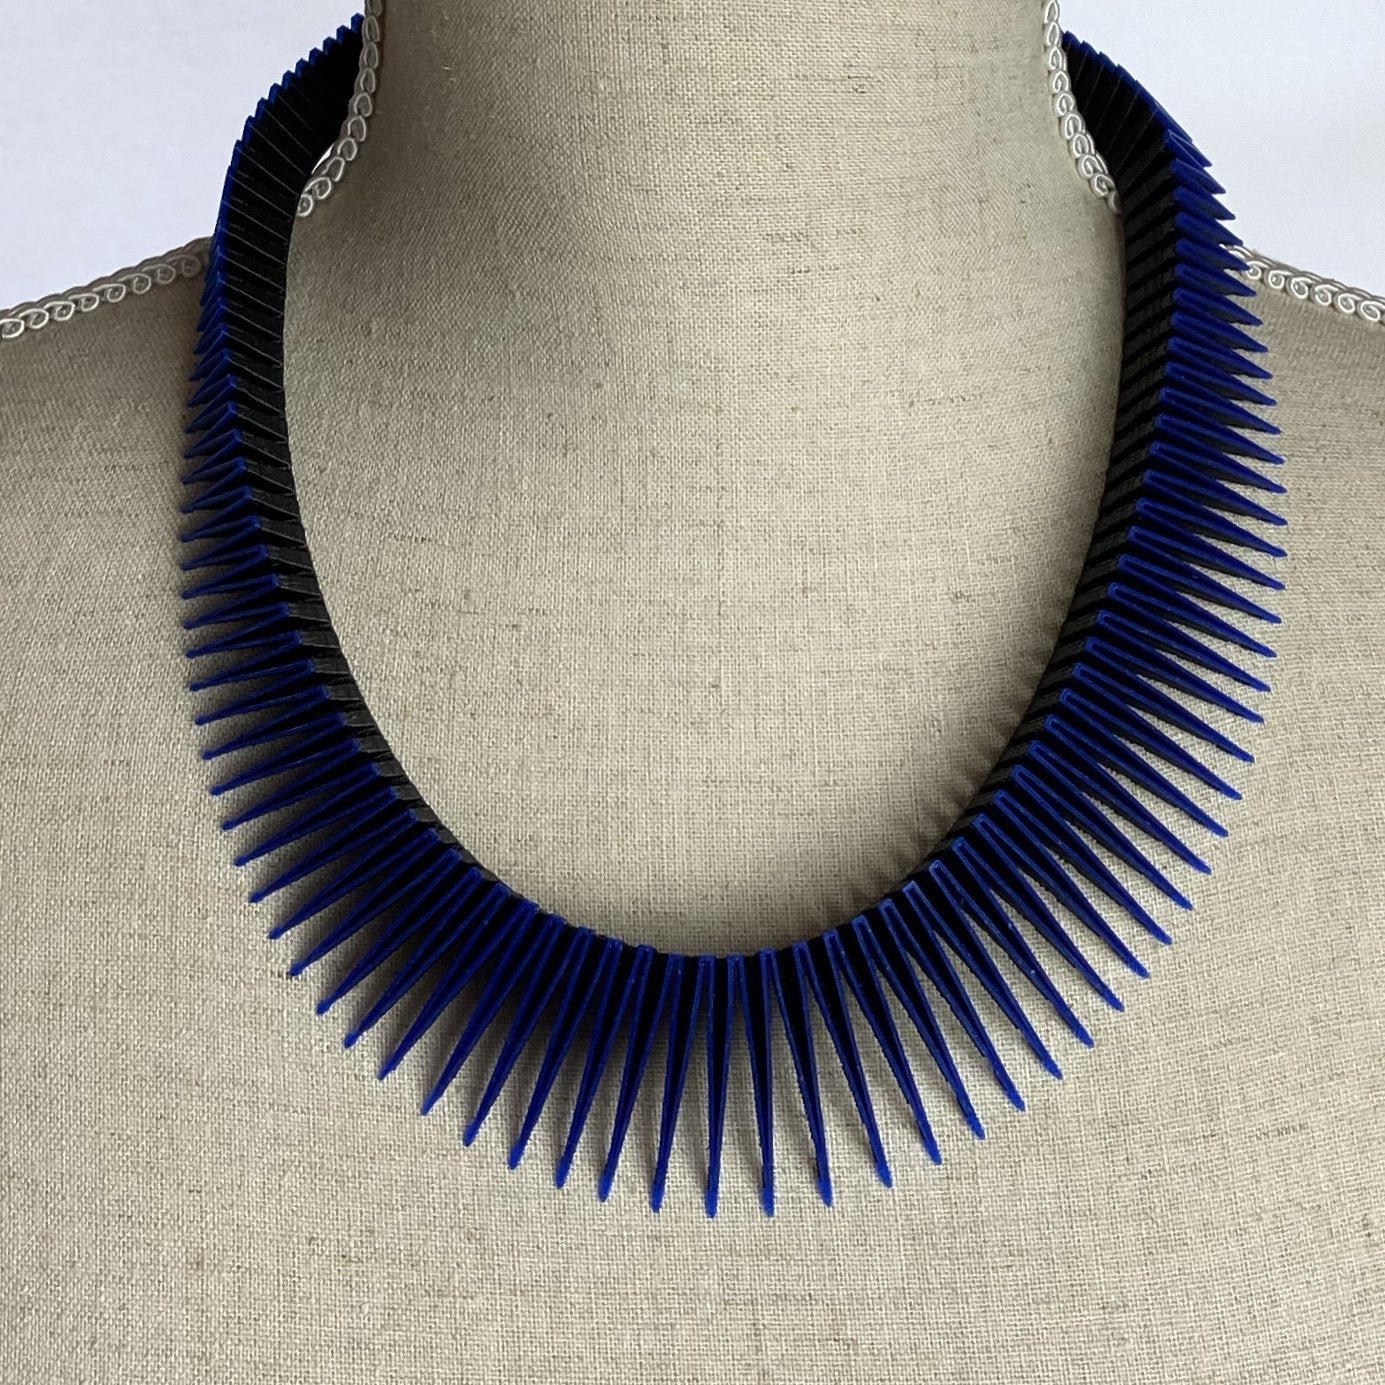 Blue on Black Serpent Necklace - The Nancy Smillie Shop - Art, Jewellery & Designer Gifts Glasgow